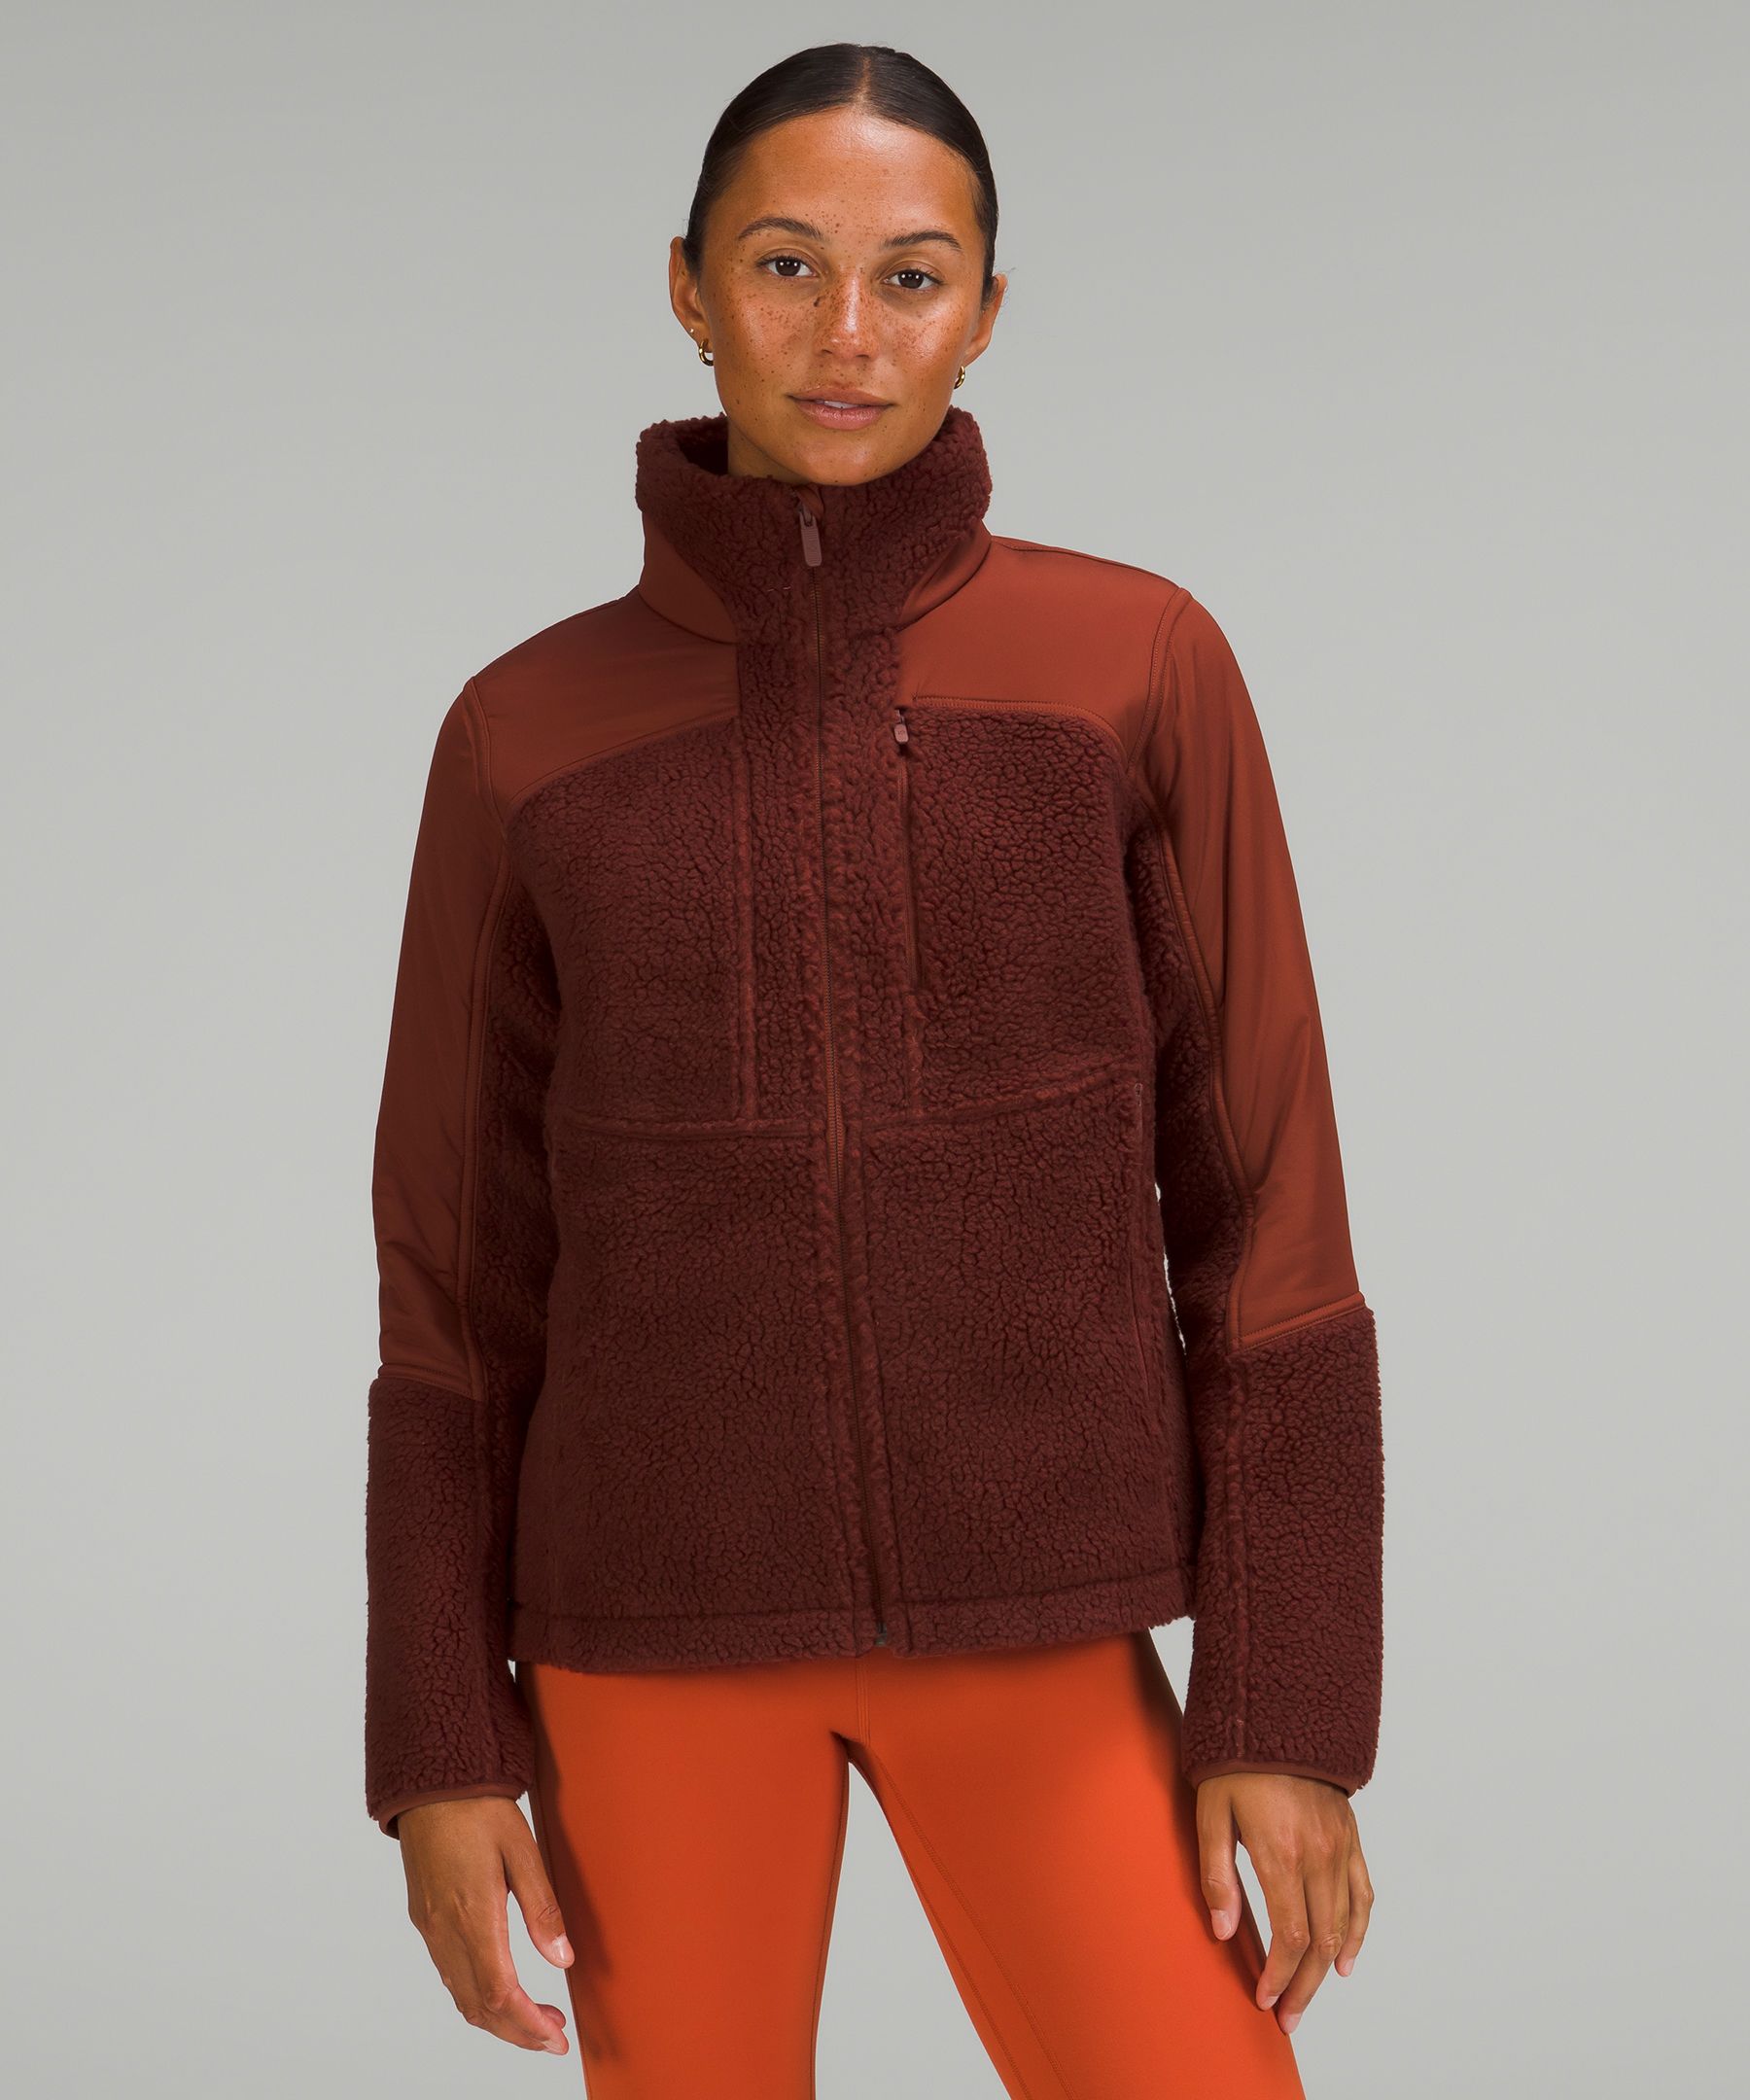 lululemon athletica, Jackets & Coats, Lululemon Textured Fleece Jacket